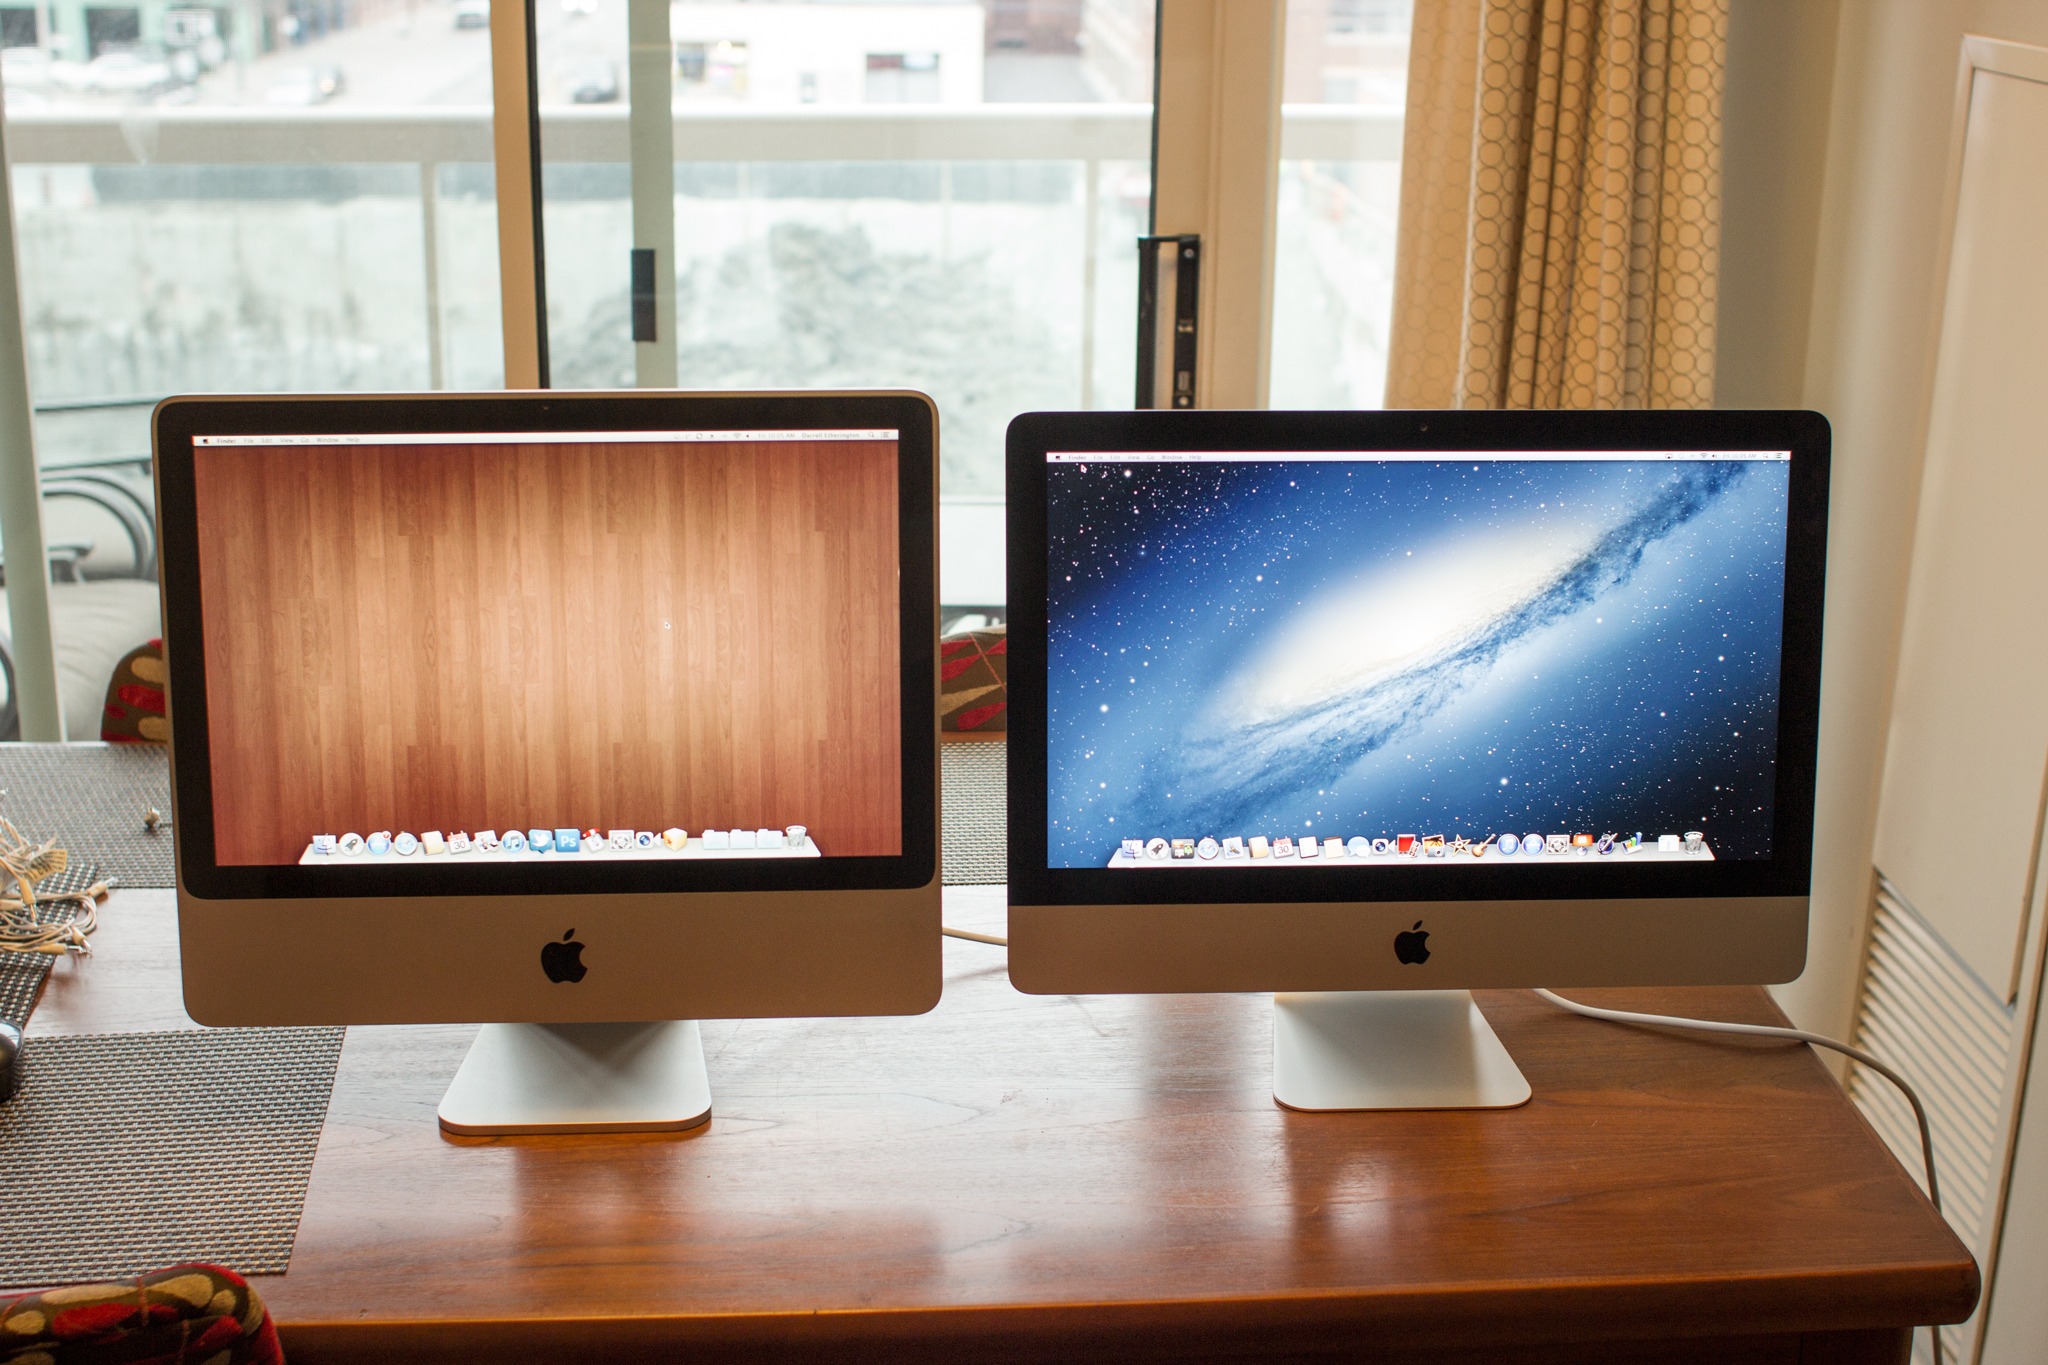 2008 20-inch iMac (left) next to 2012 21.5-inch iMac